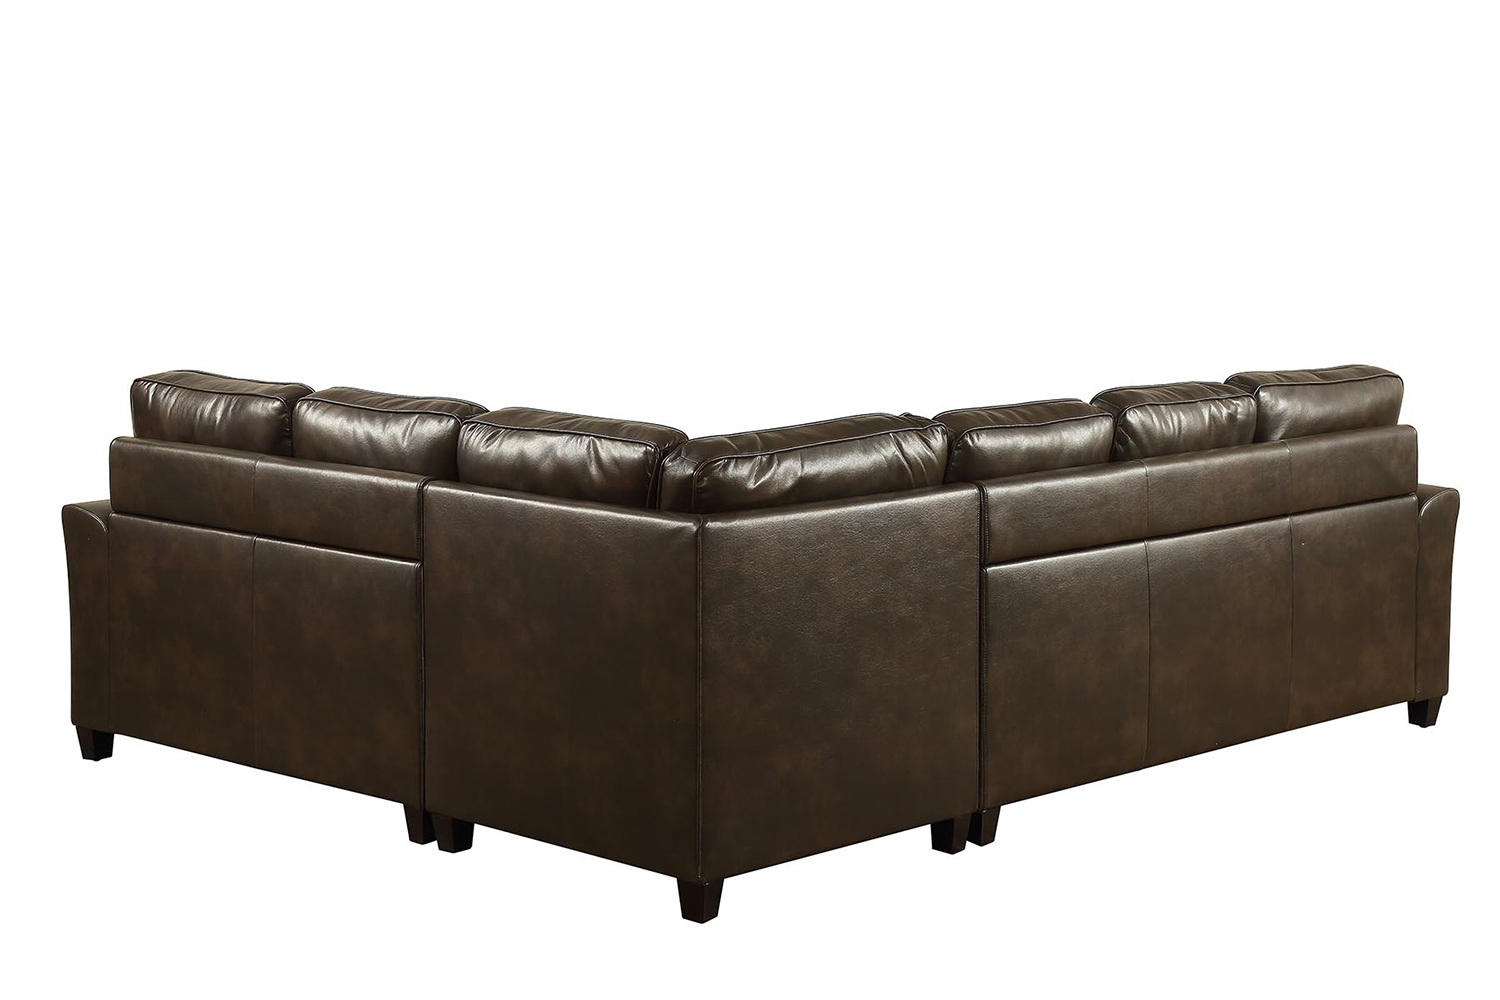 Coaster Larkny Sectional Sofa - Dark brown